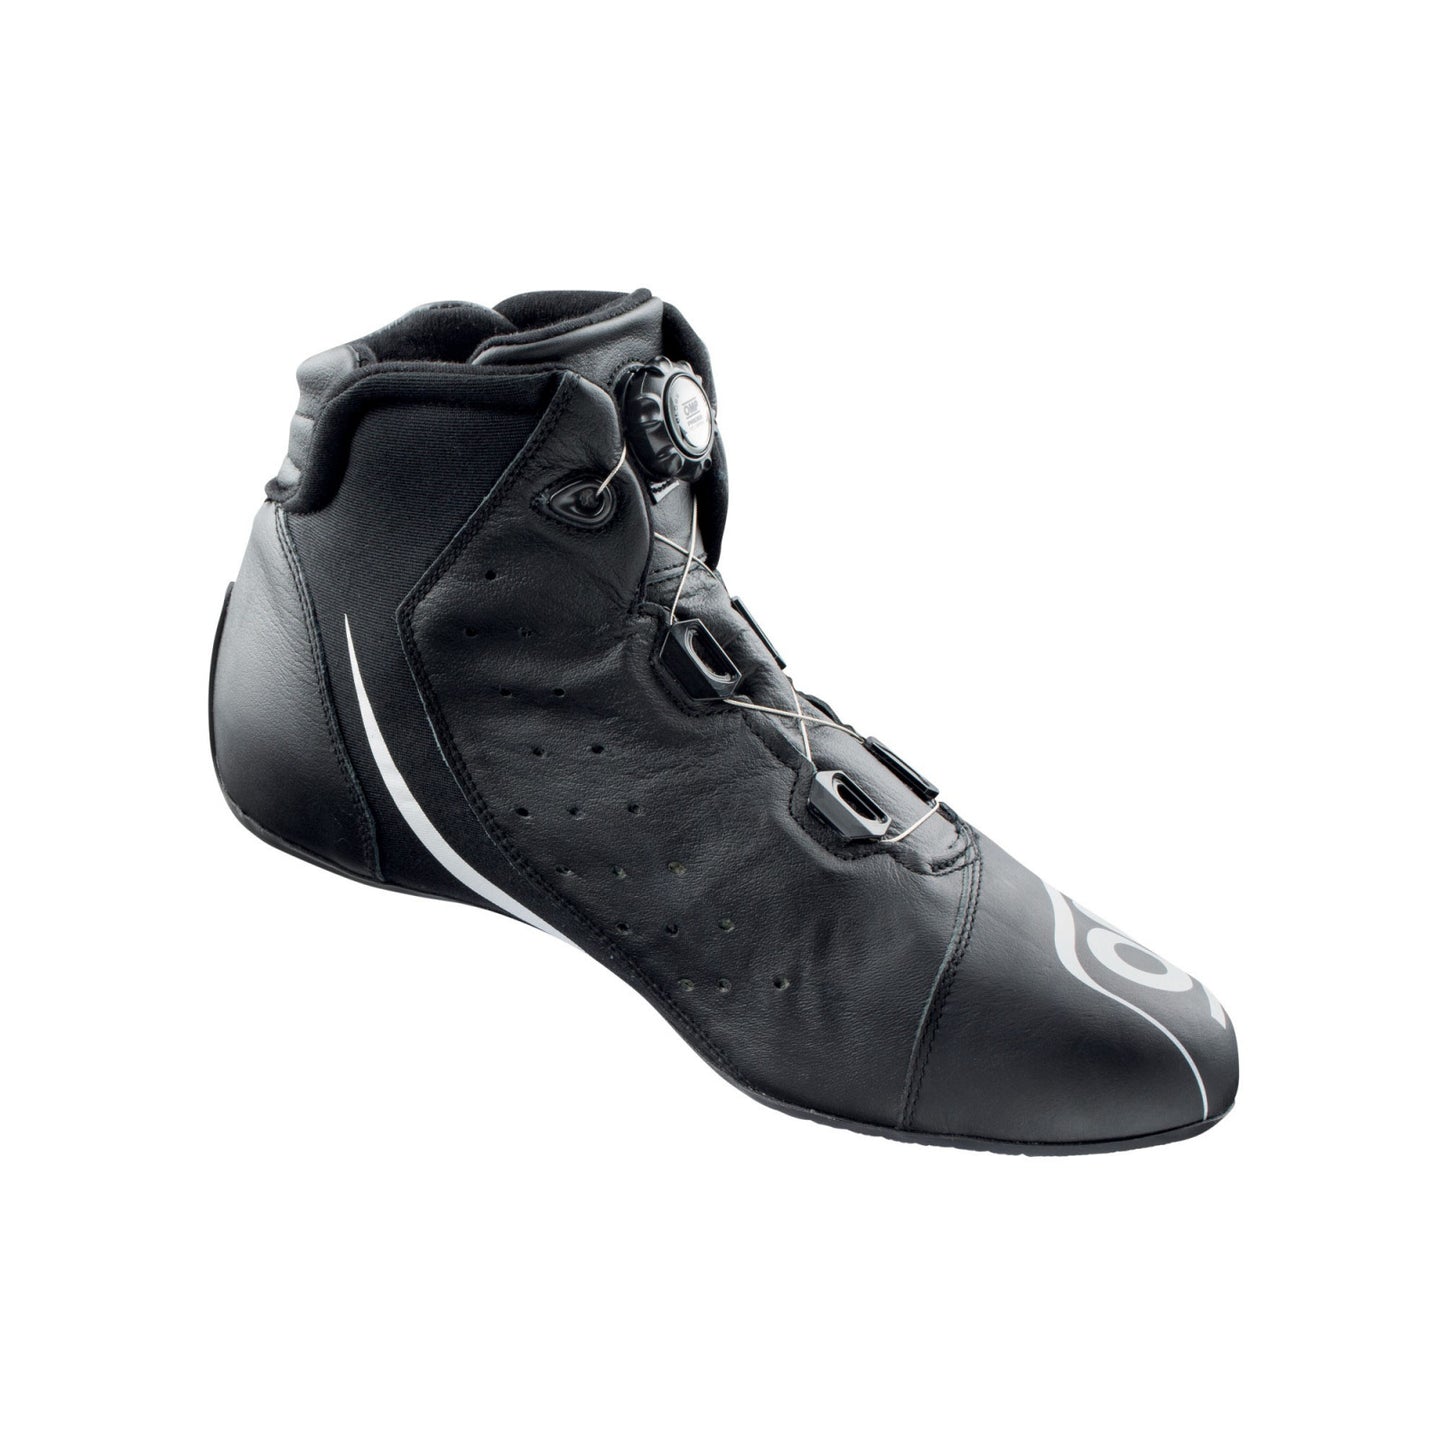 OMP Evo X R Shoes Black Size 43 IC805E07143